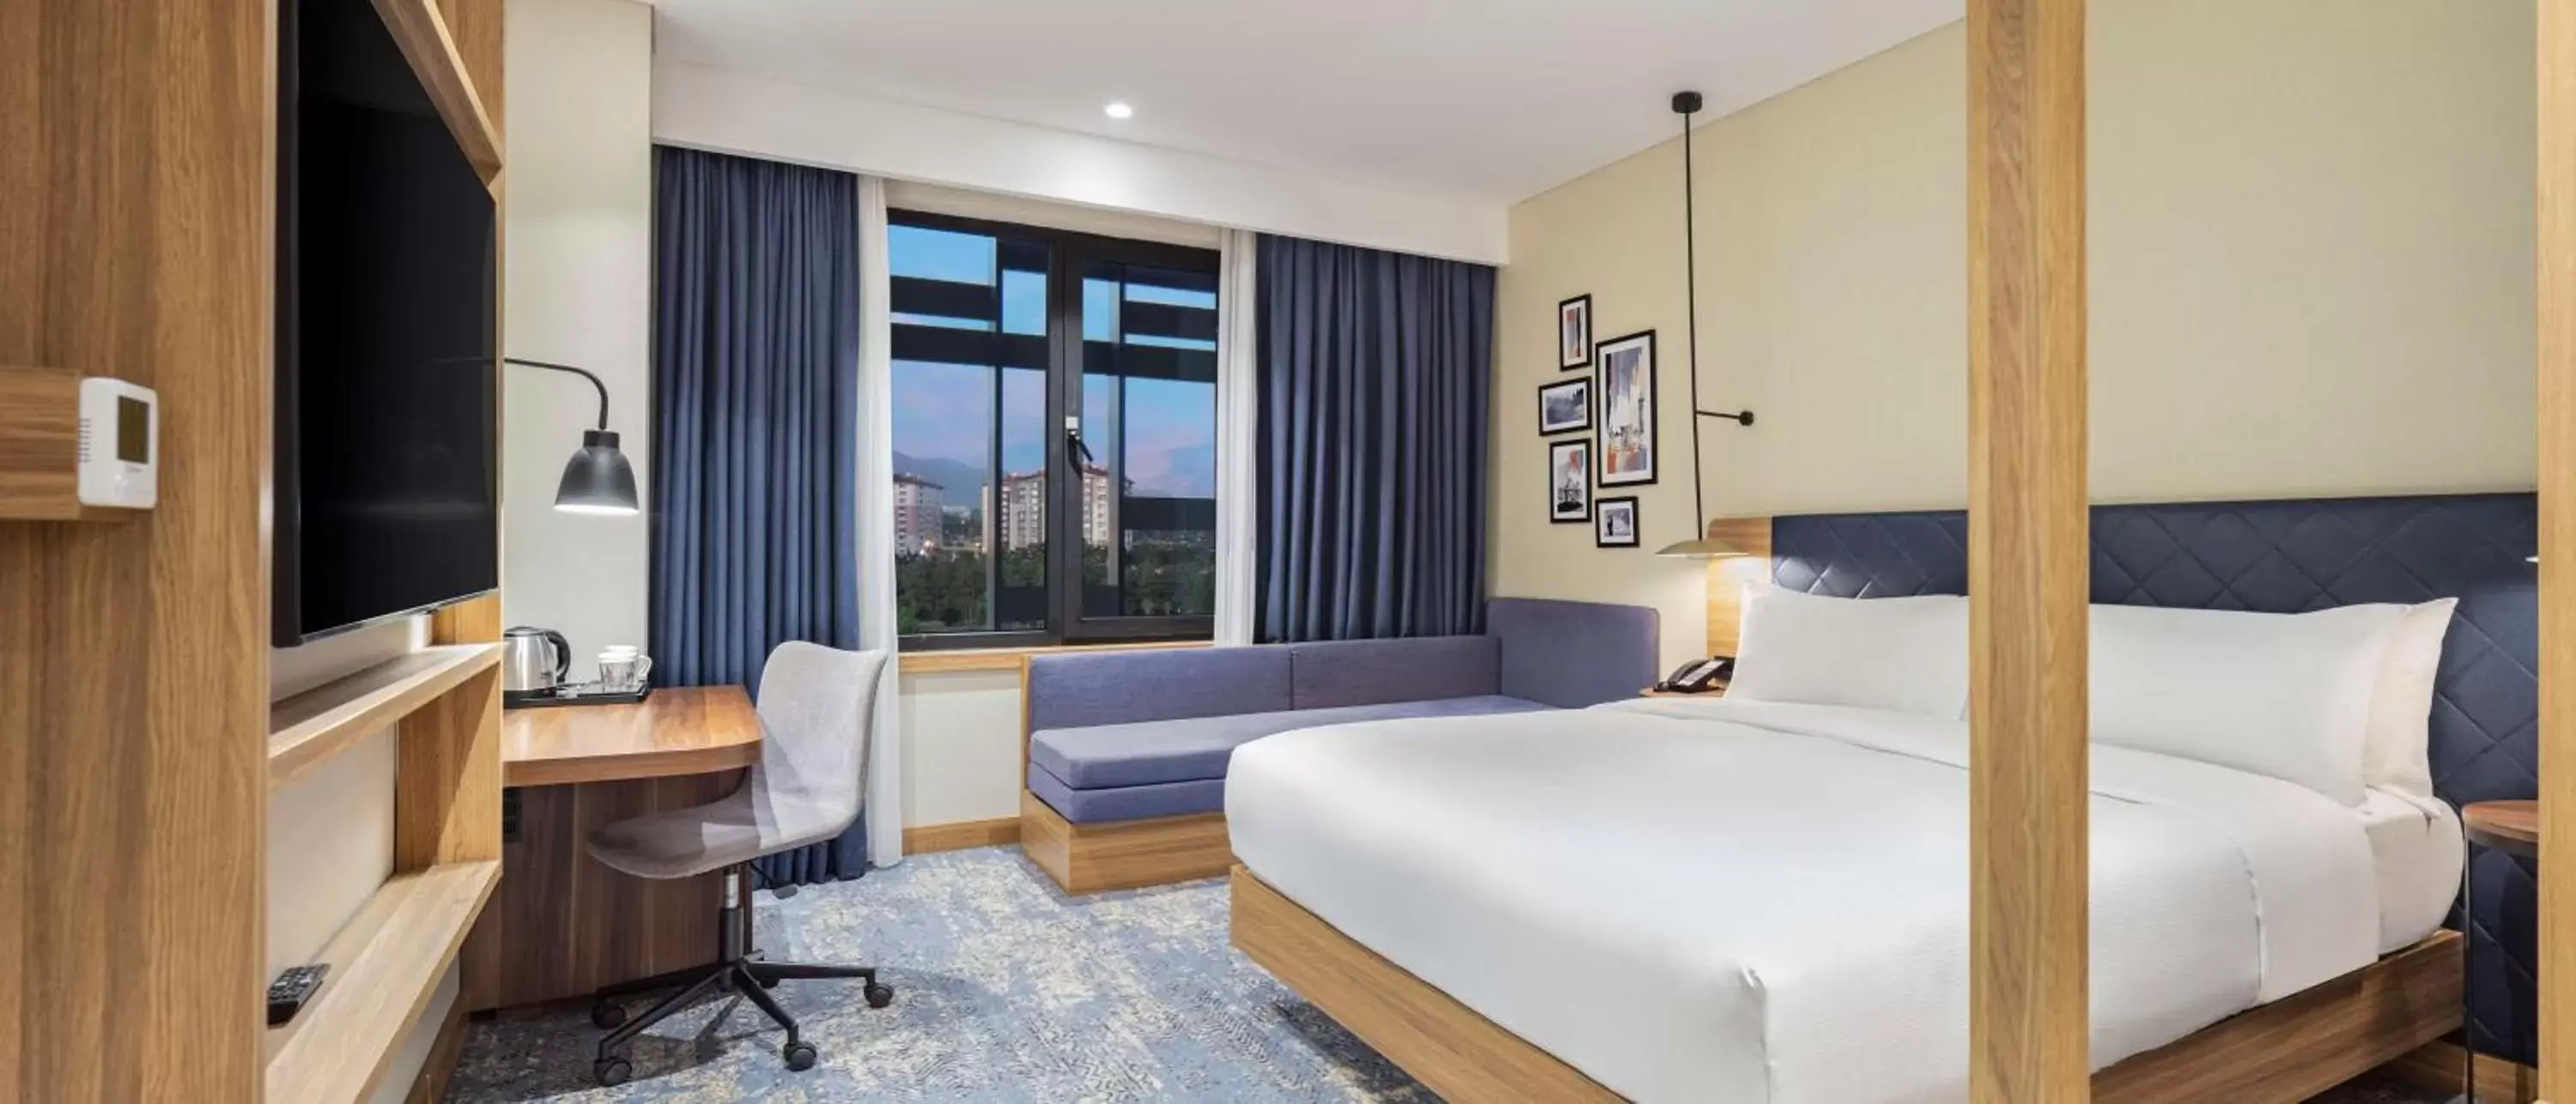 Bedroom in Hilton Garden Inn Erzurum